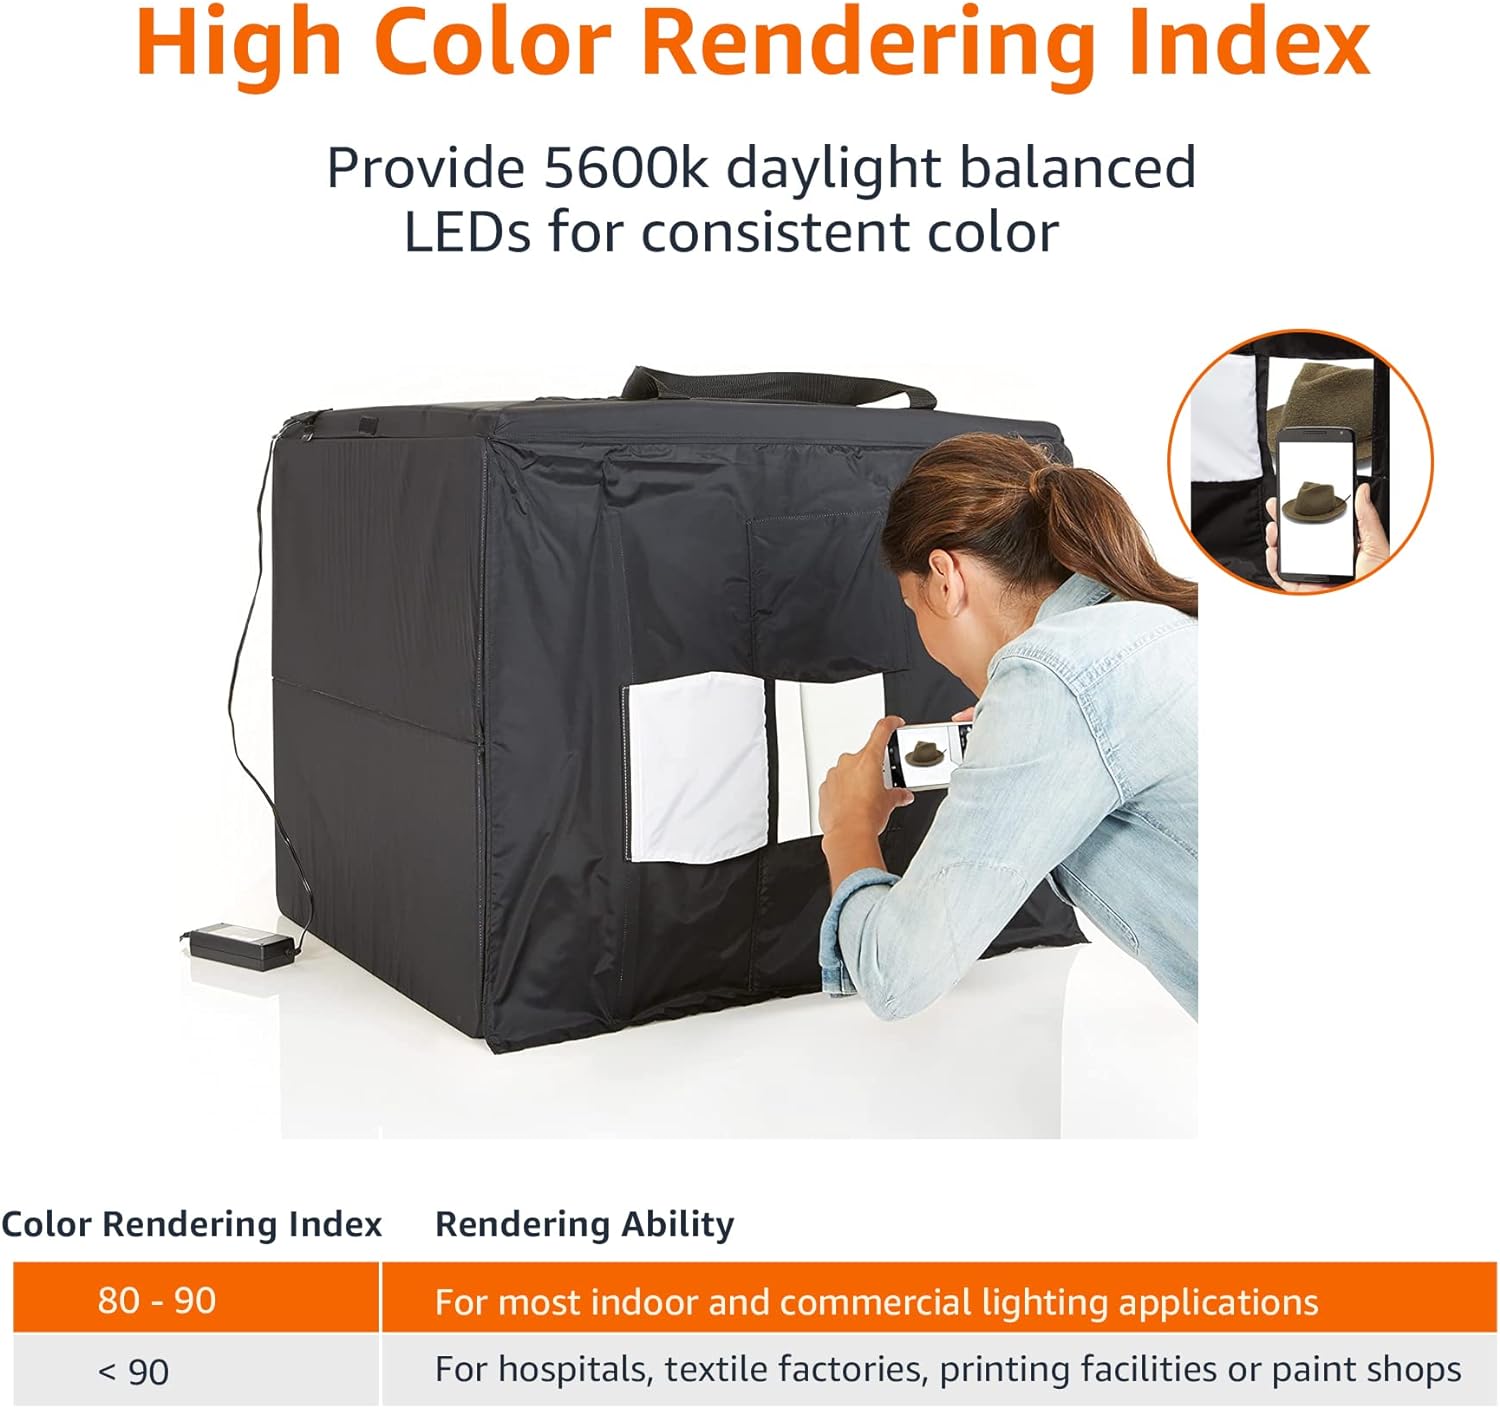 Amazon Basics Portable Foldable Photo Studio Box with LED Light, 1 Count (Pack of 1), Black, 25 x 30 x 25 Inches